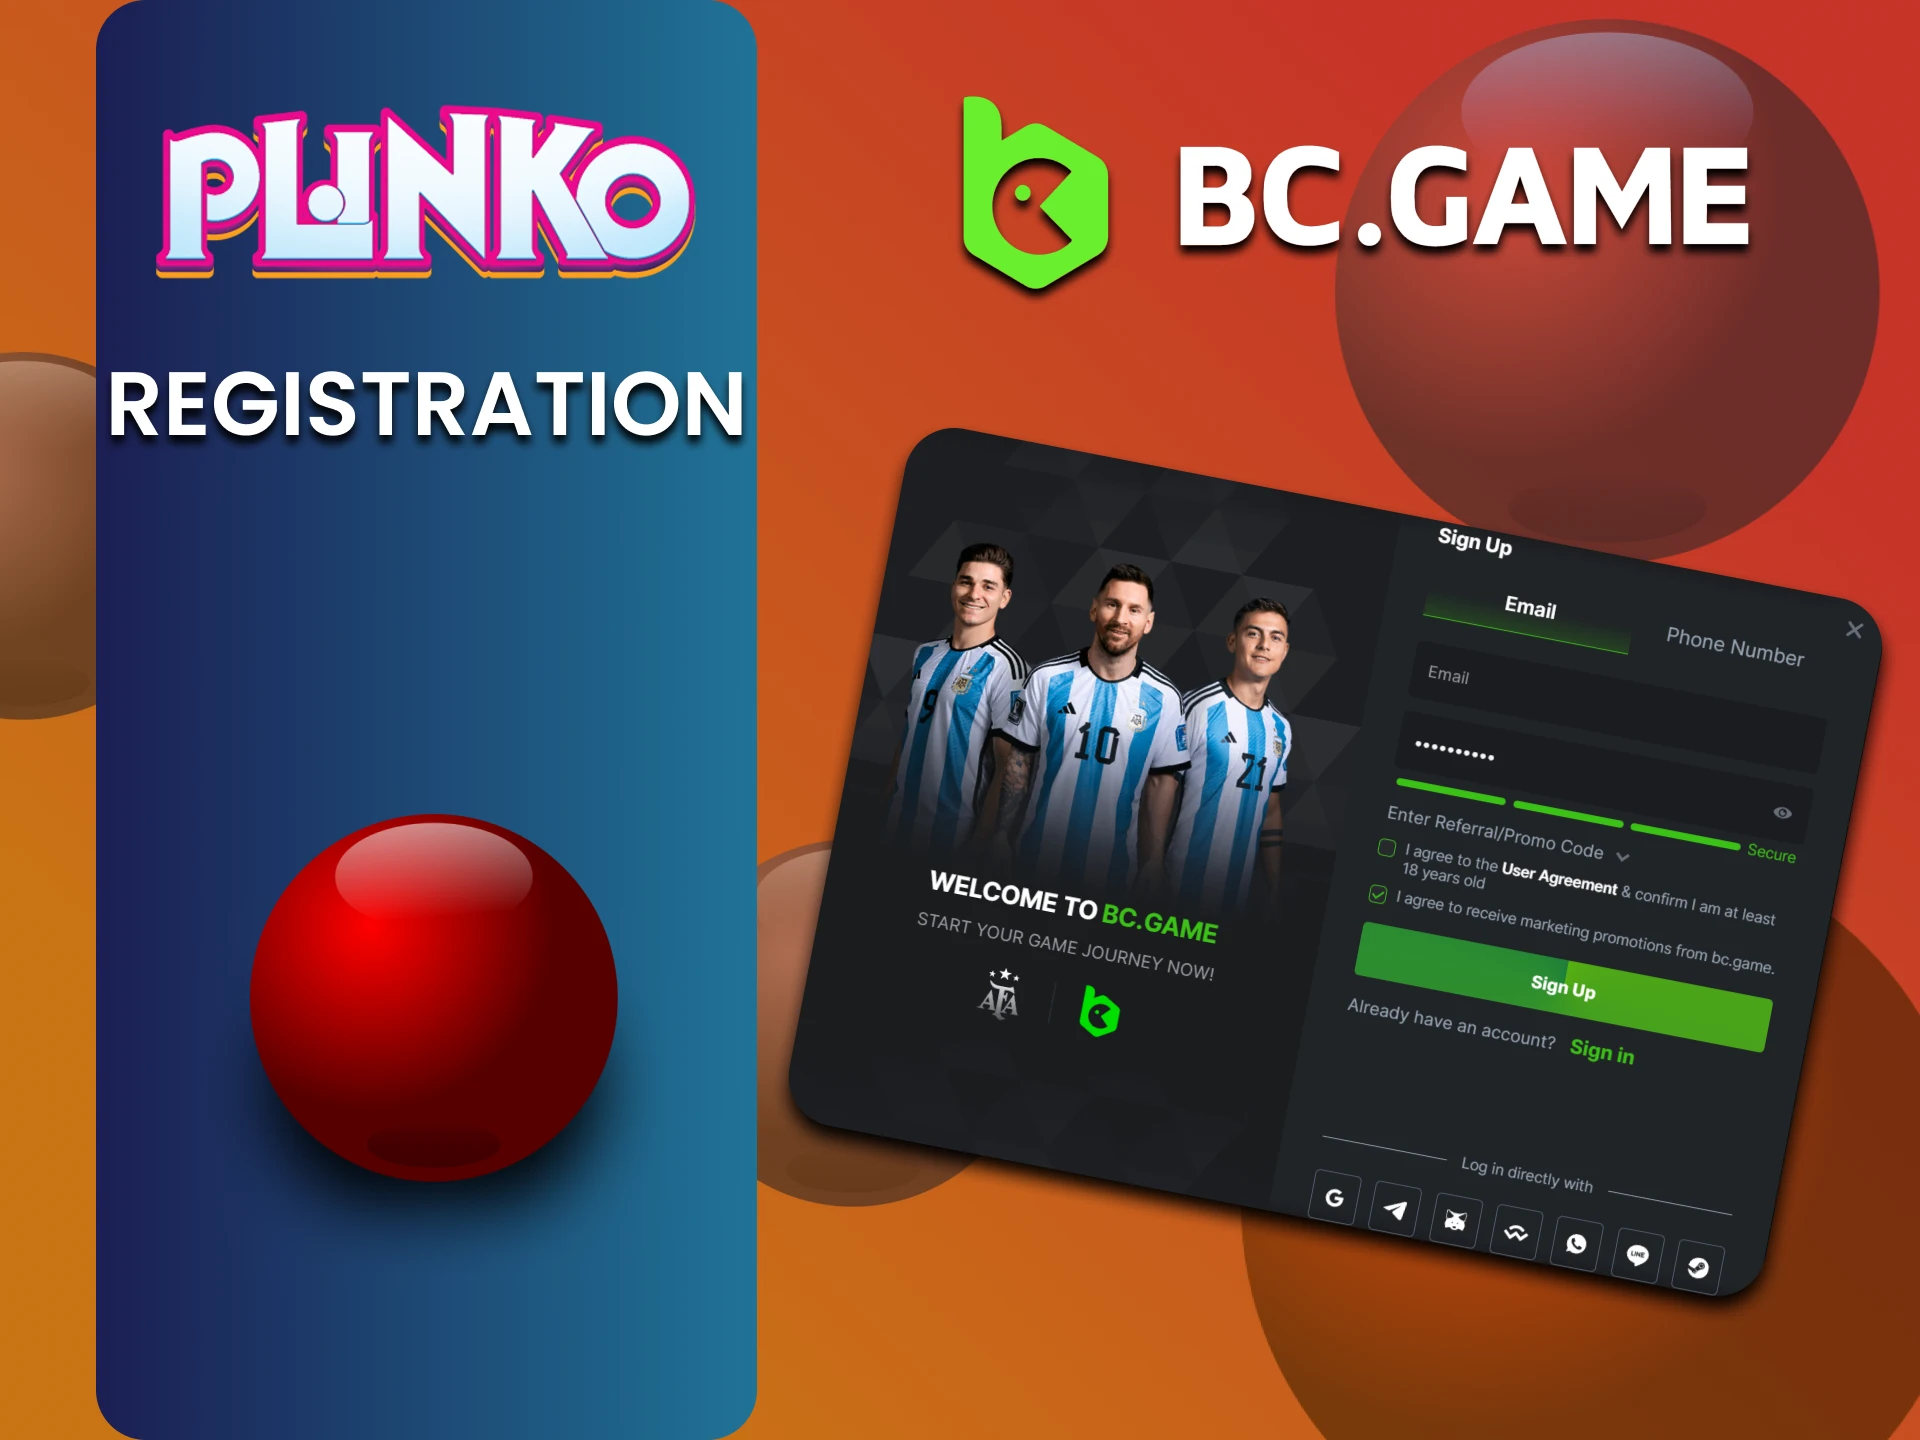 Go through the BC Game registration process to start playing Plinko.